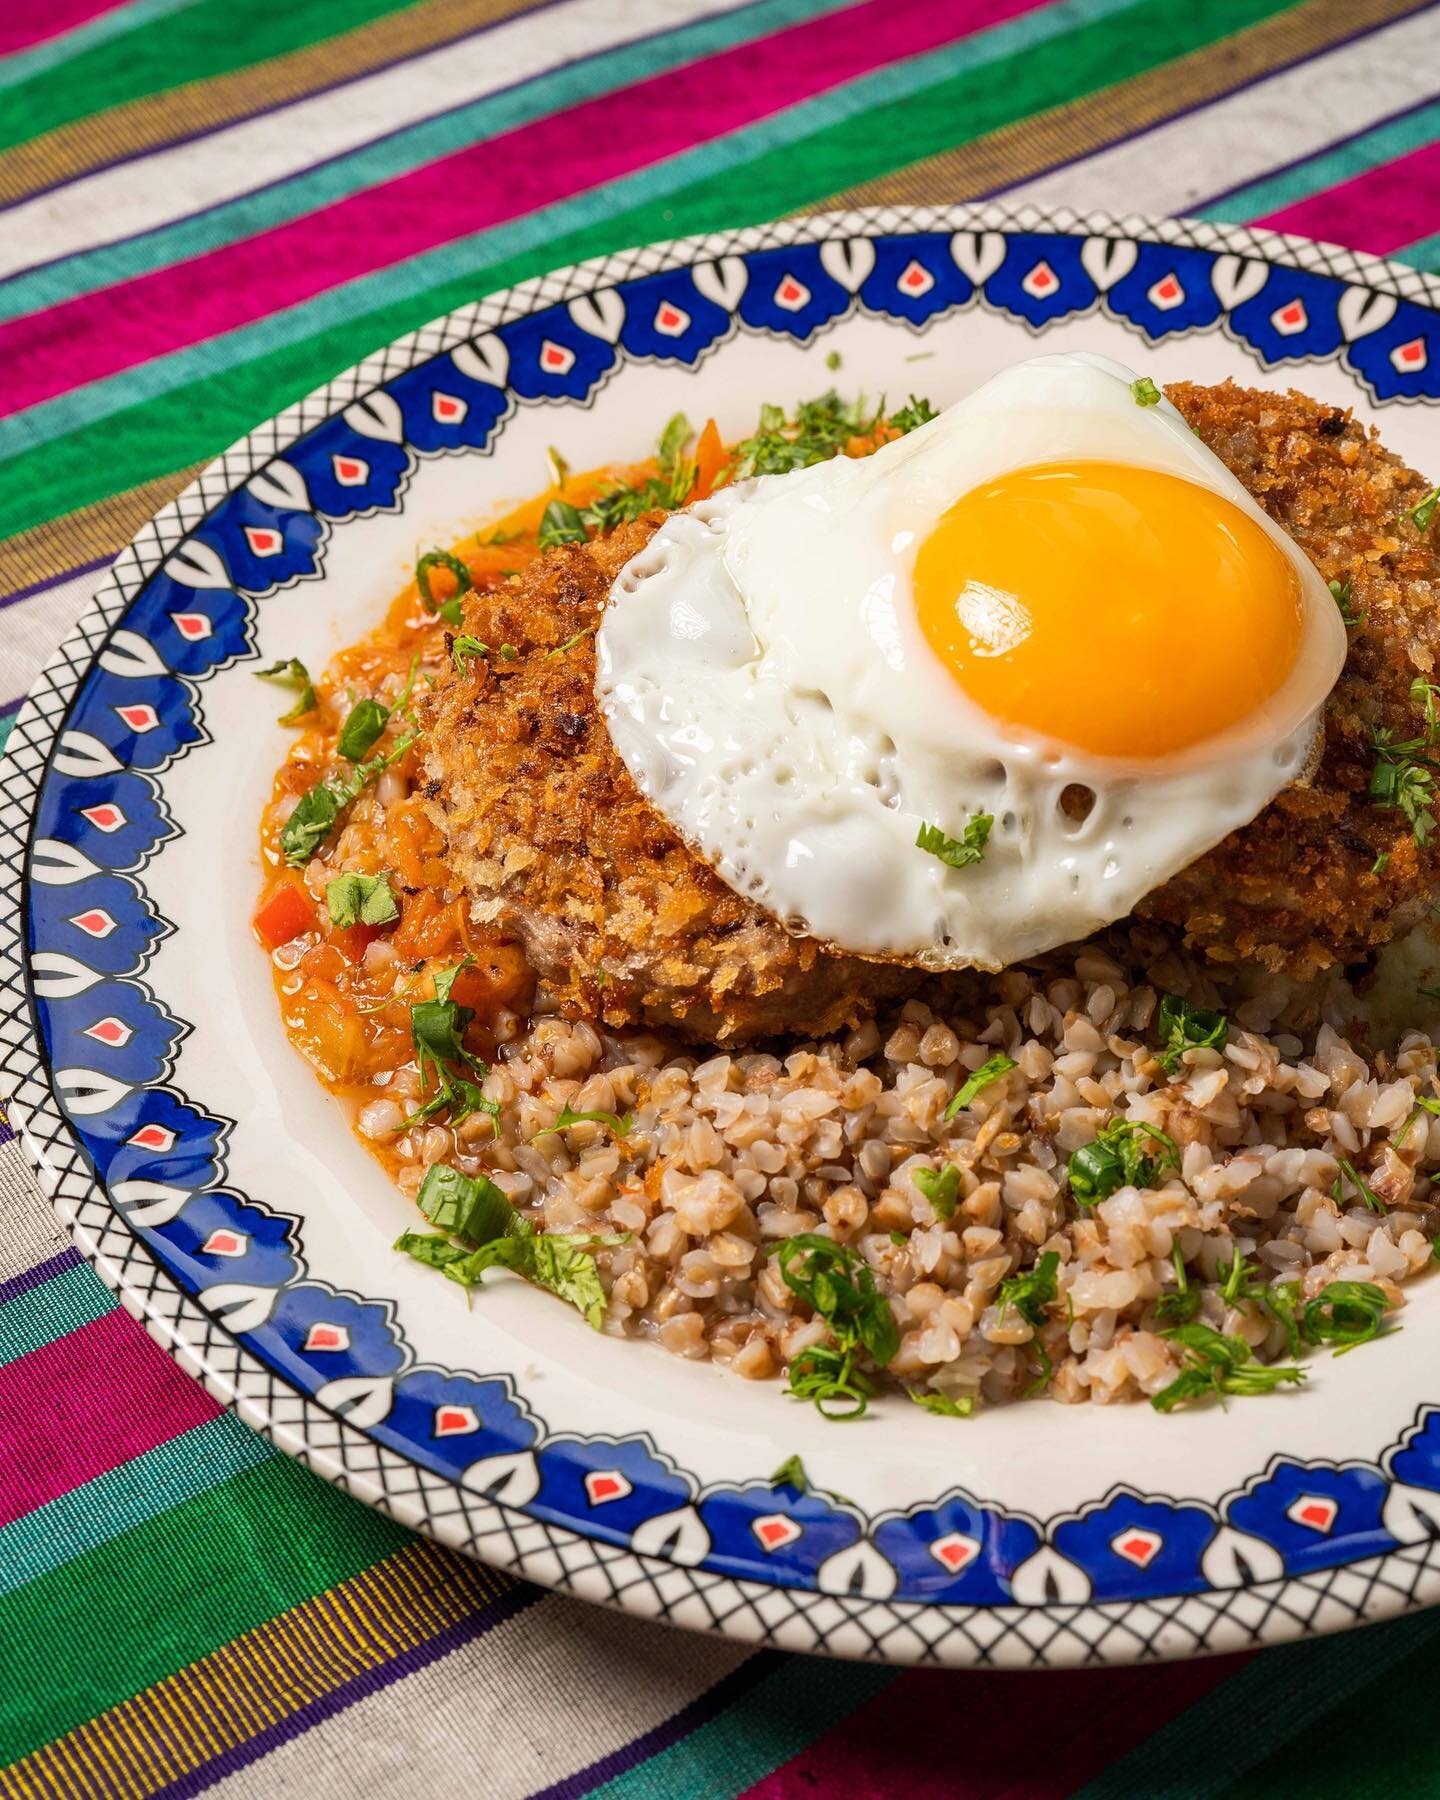 Now available - BIFSHTEKS

Beef cutlets, mashed potato, buckwheat, eggs and herbs. ✨ 

To book a table, please call 0545764444 or 045668751.

#ChinorDubai #Uzbekistan #UzbekCuisine #dubai